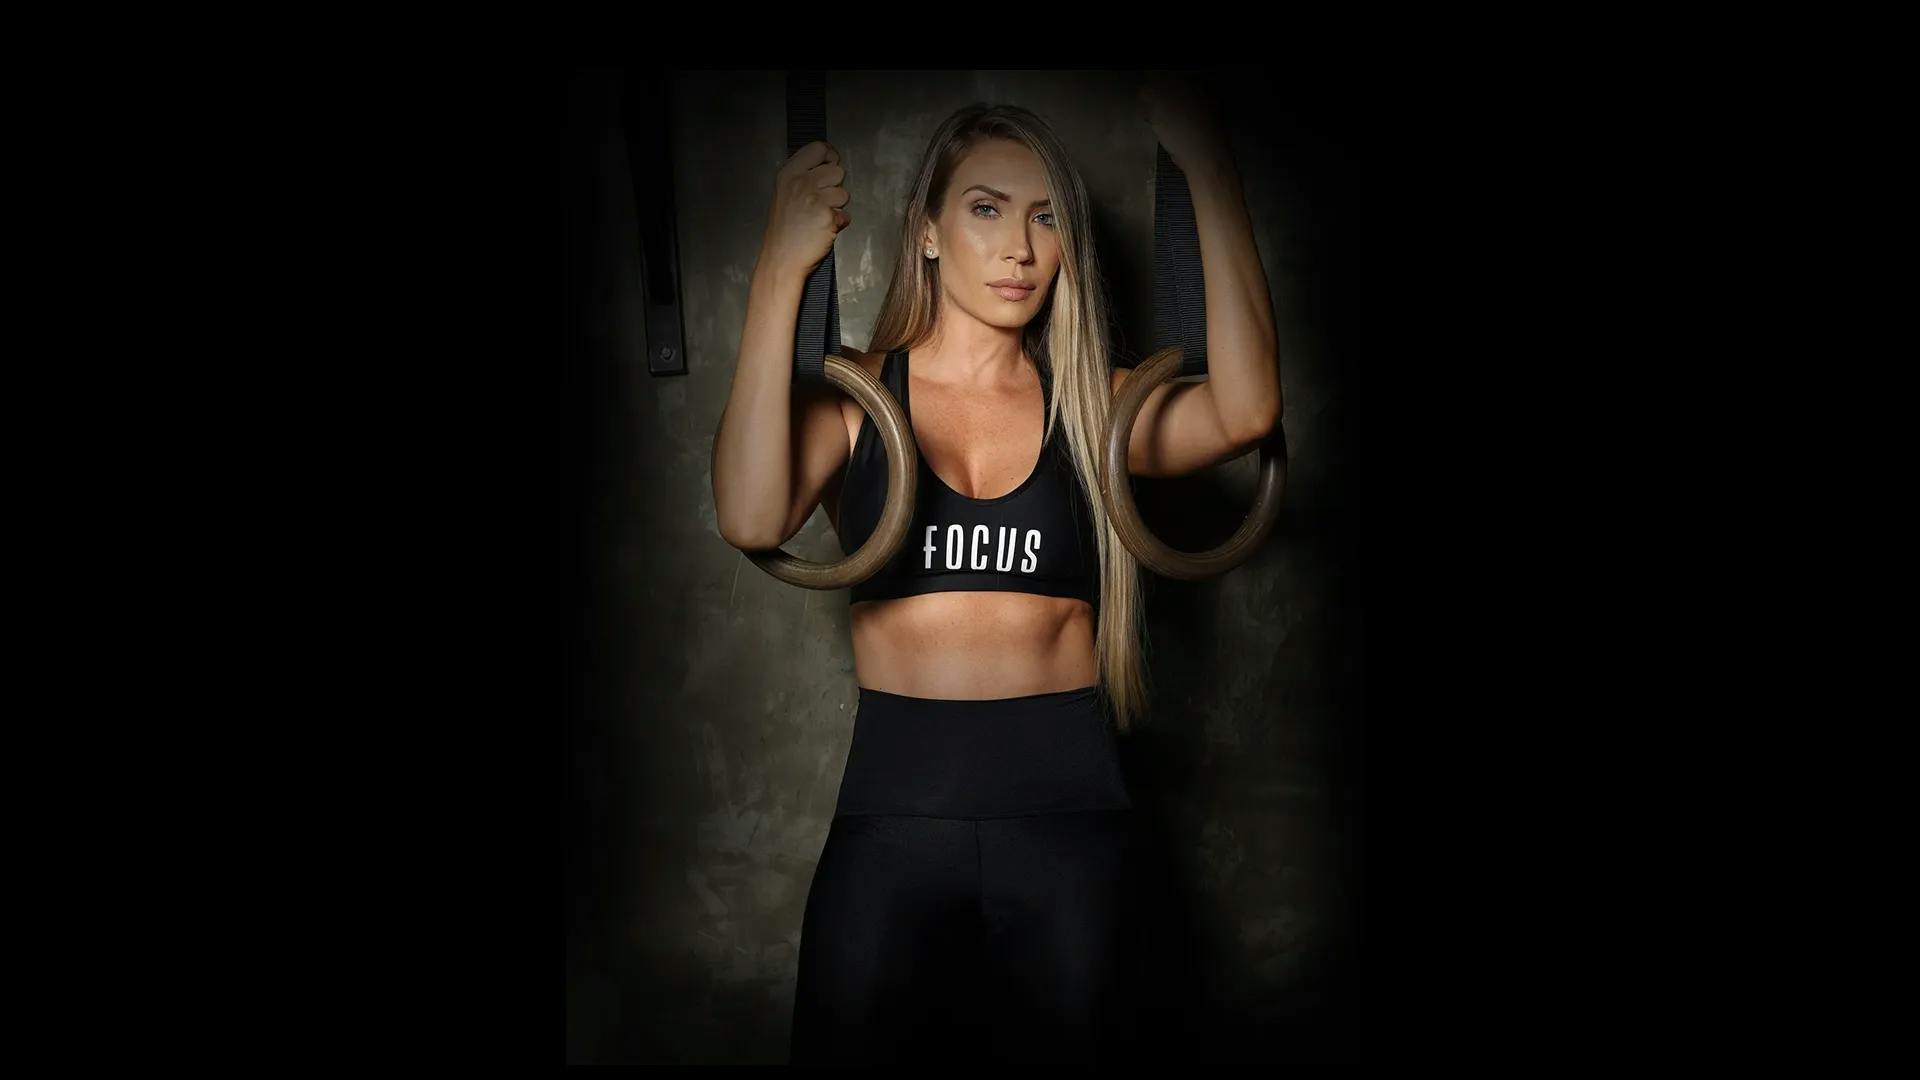 Foto de modelo de gimnasio Focus Fitness